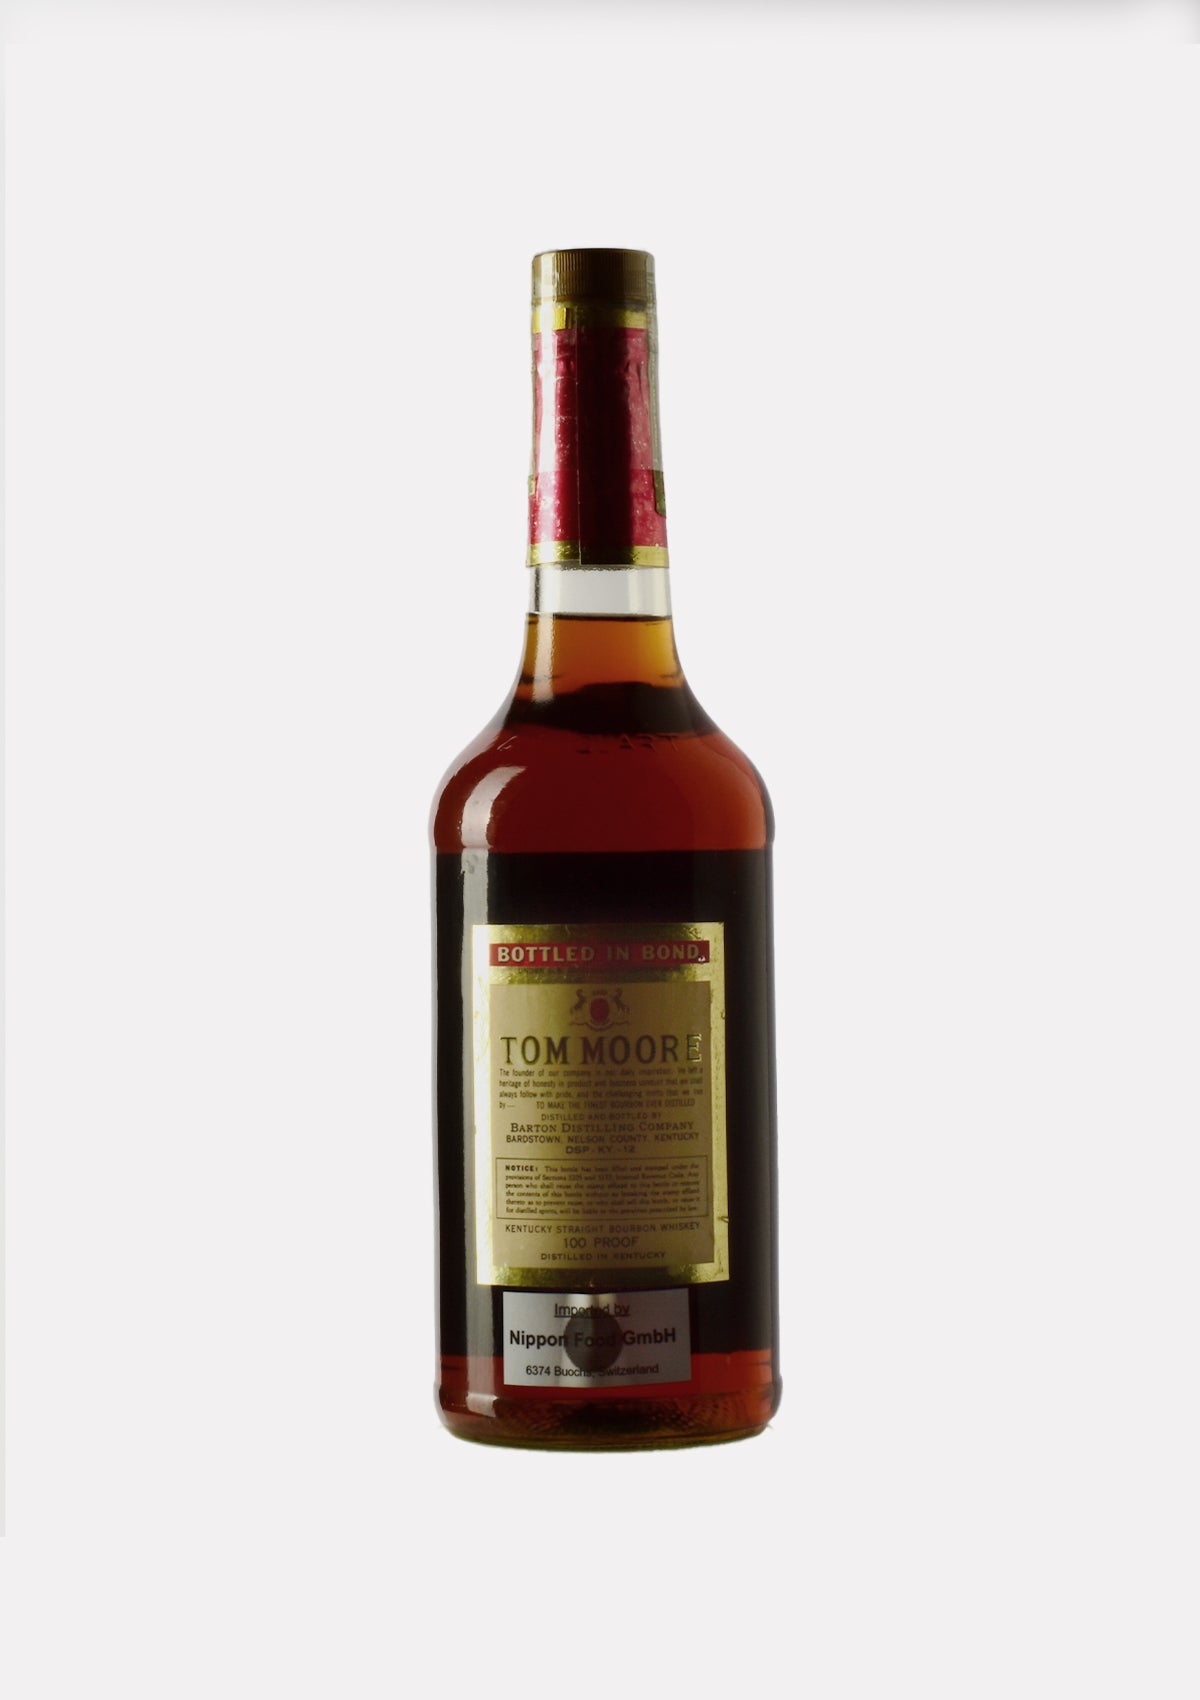 Tom Moore Kentucky Straight Bourbon Whiskey